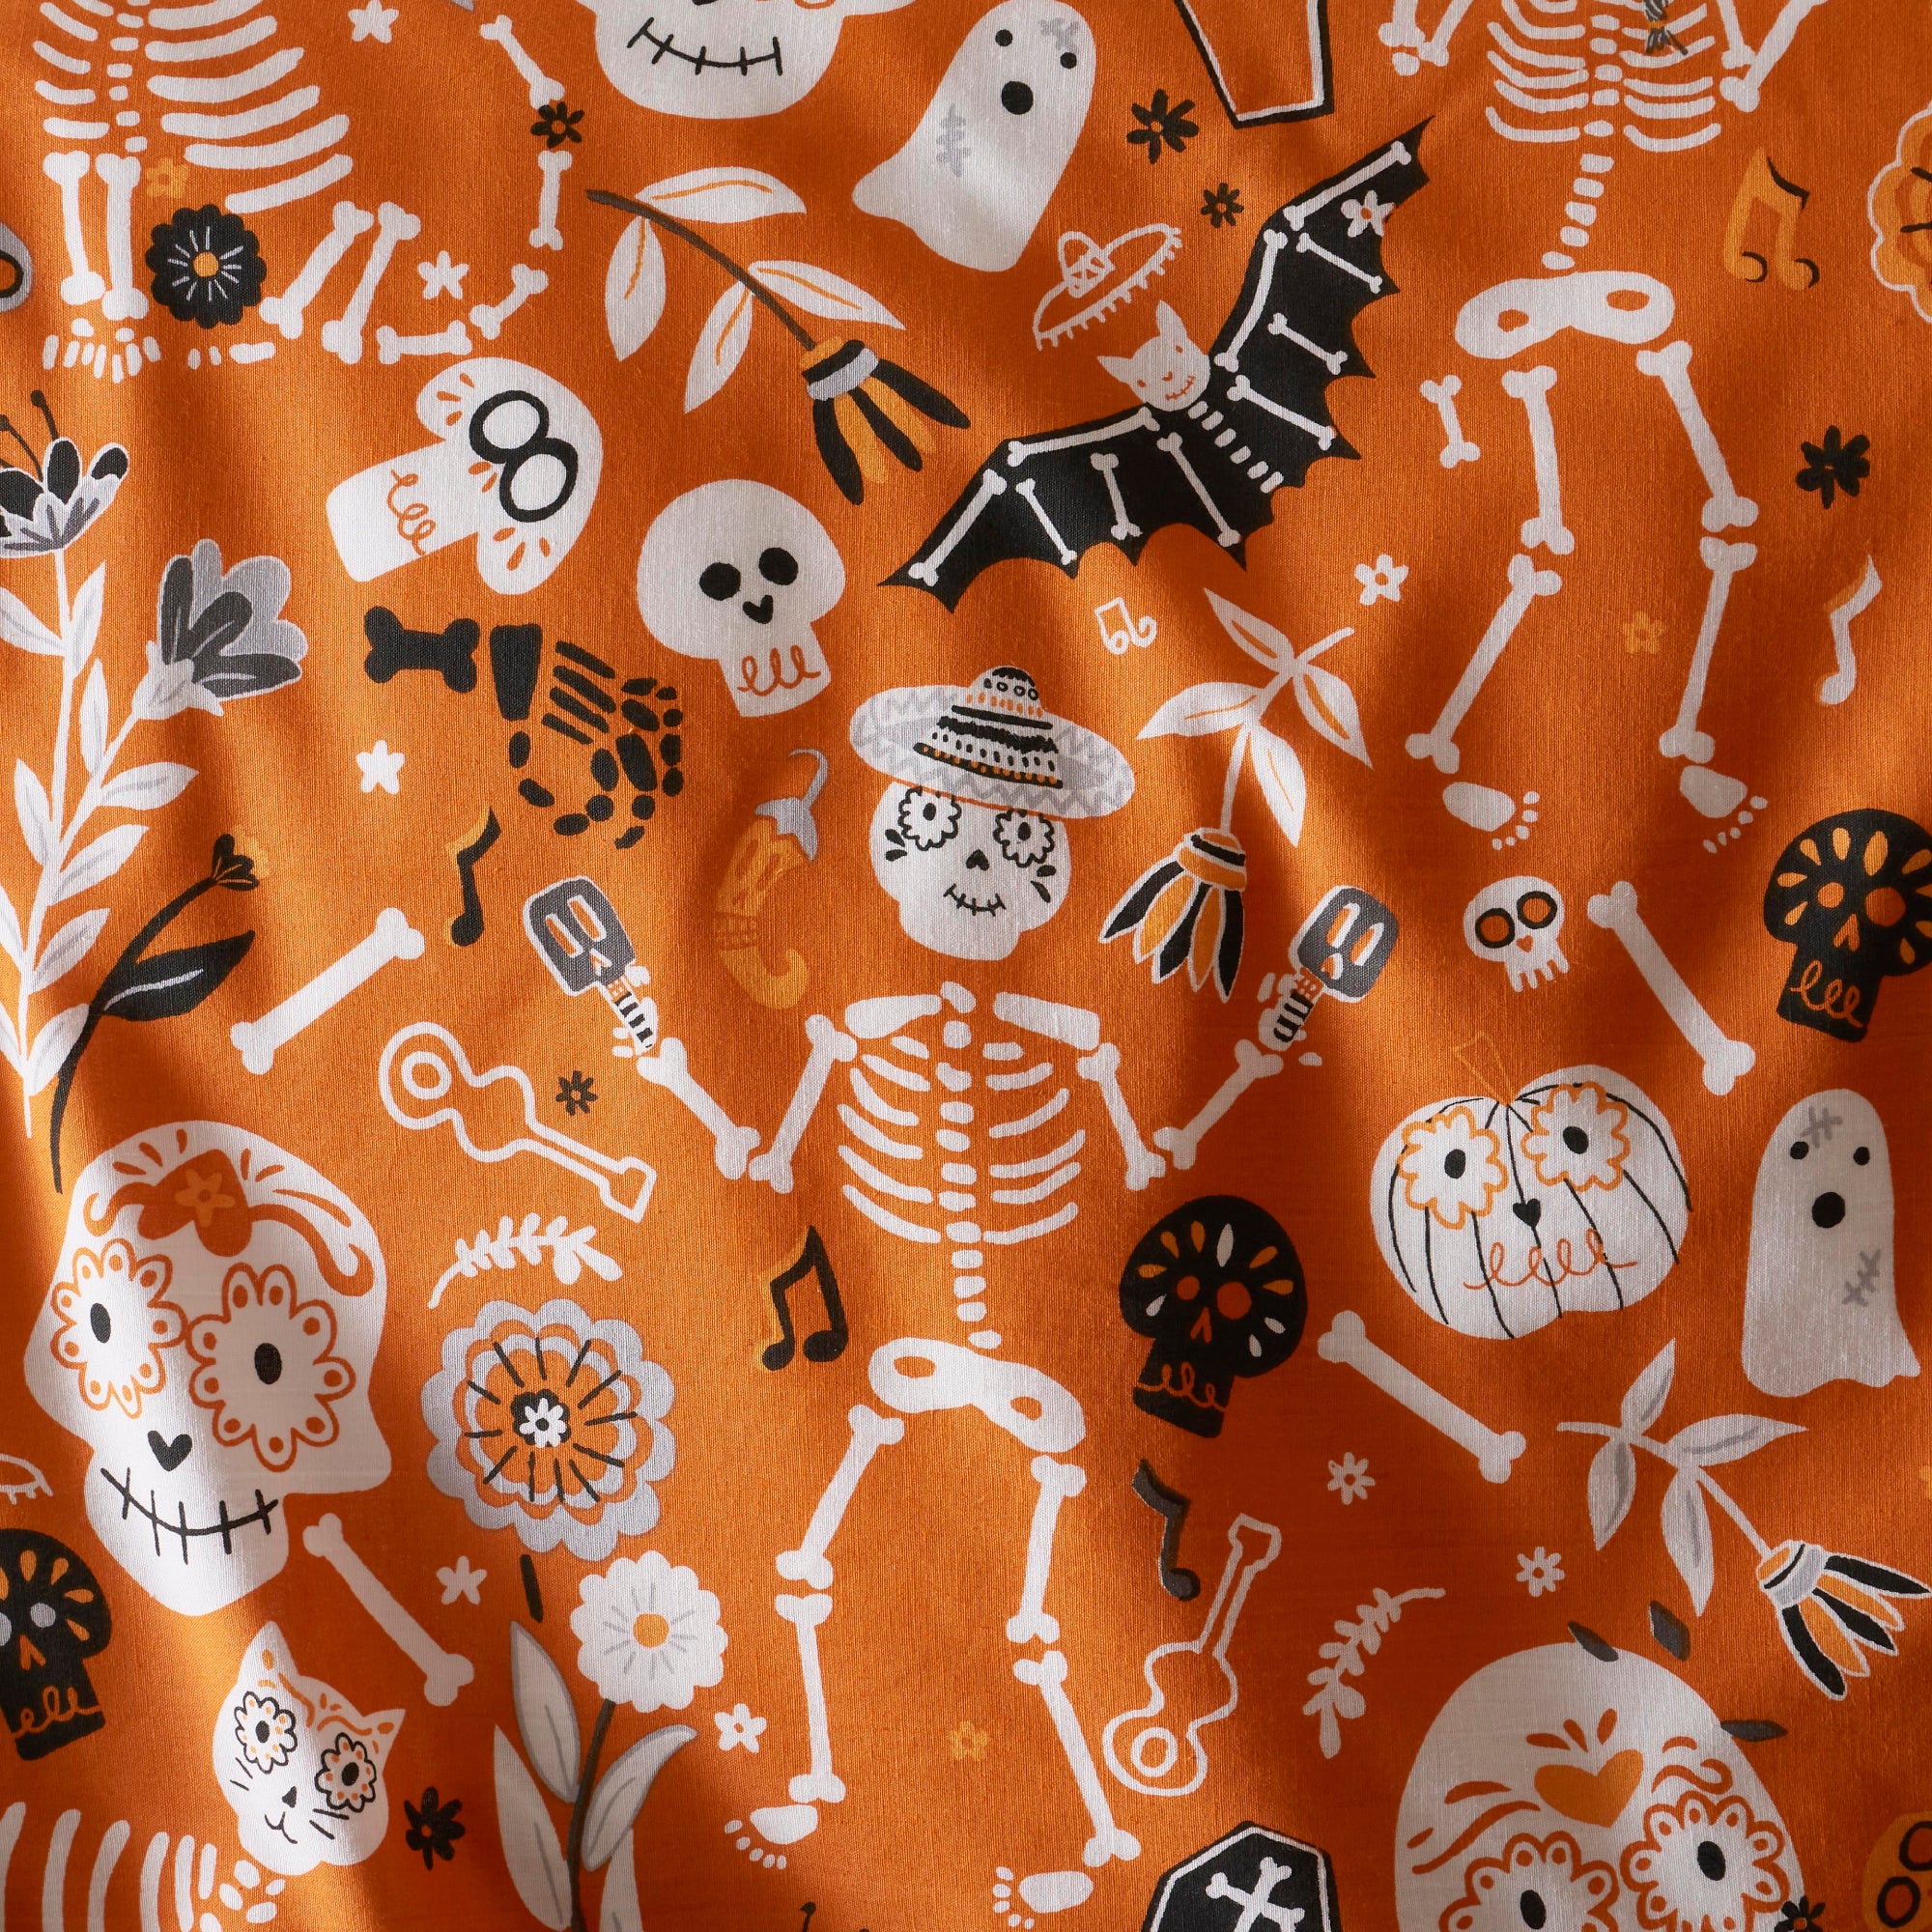 Duvet Cover Set Halloween Day of the Dead by Bedlam in Black/Orange